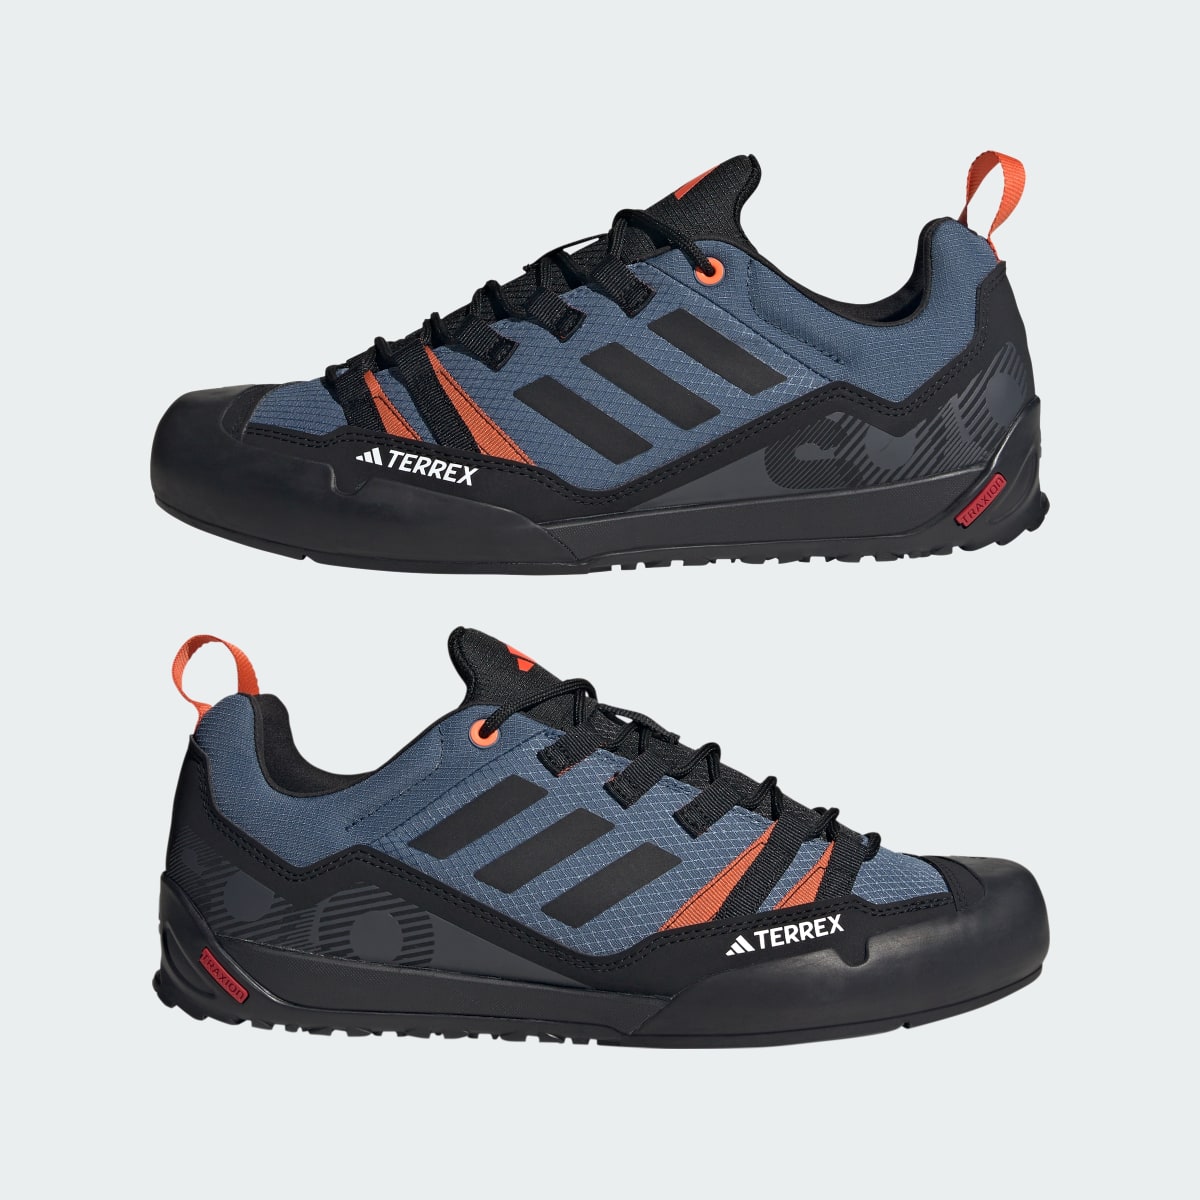 Adidas Chaussure de randonnée Terrex Swift Solo 2.0. 8